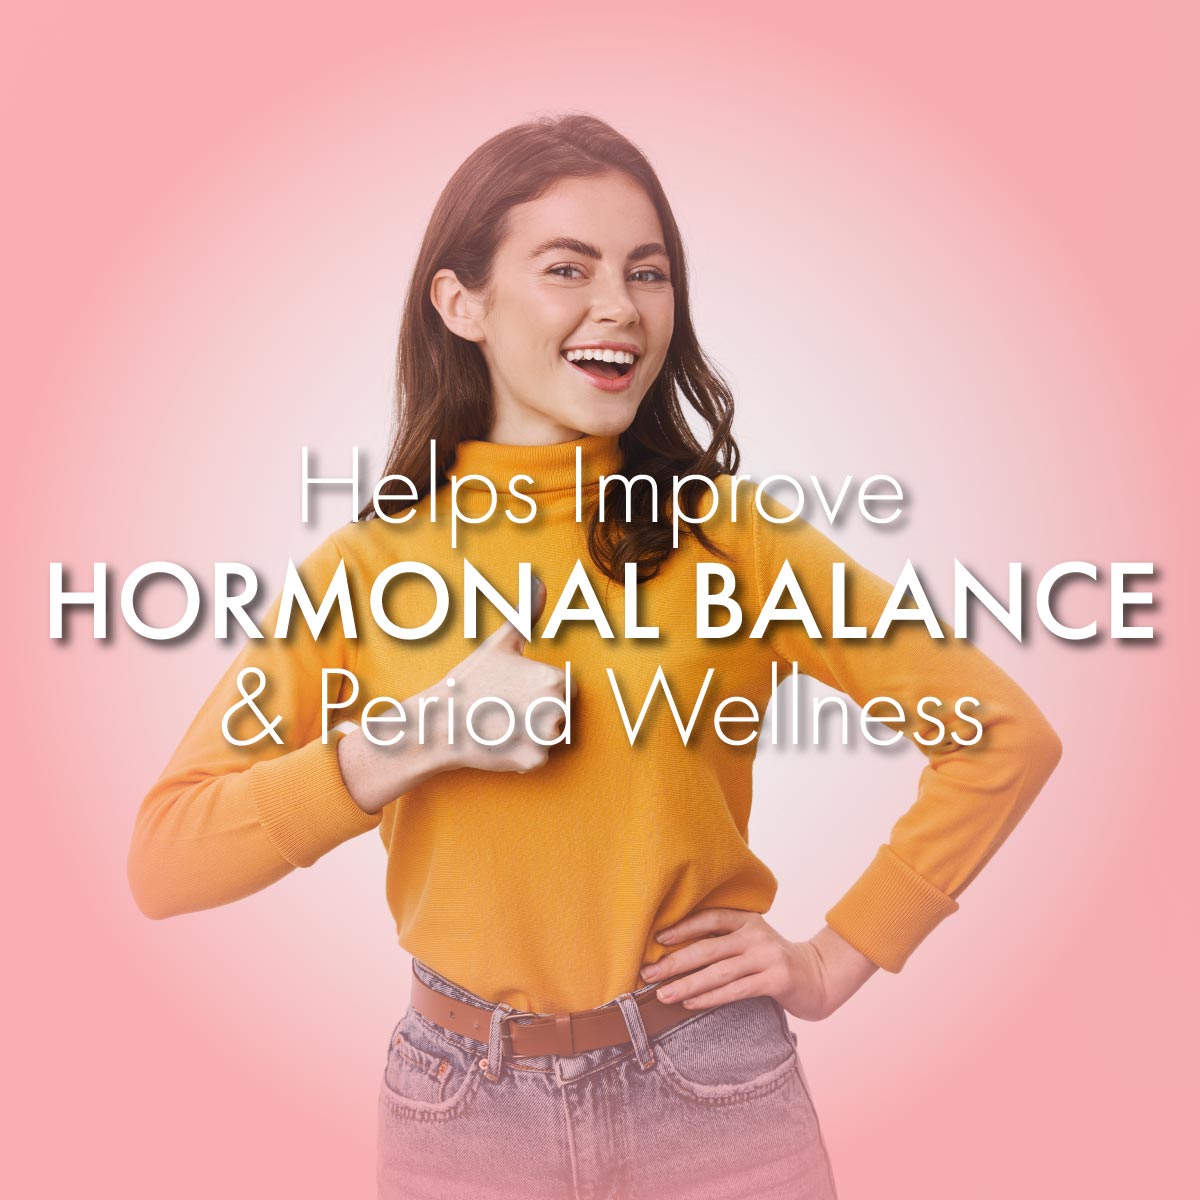 Period Wellness Pack: For Better Period Health & Wellness